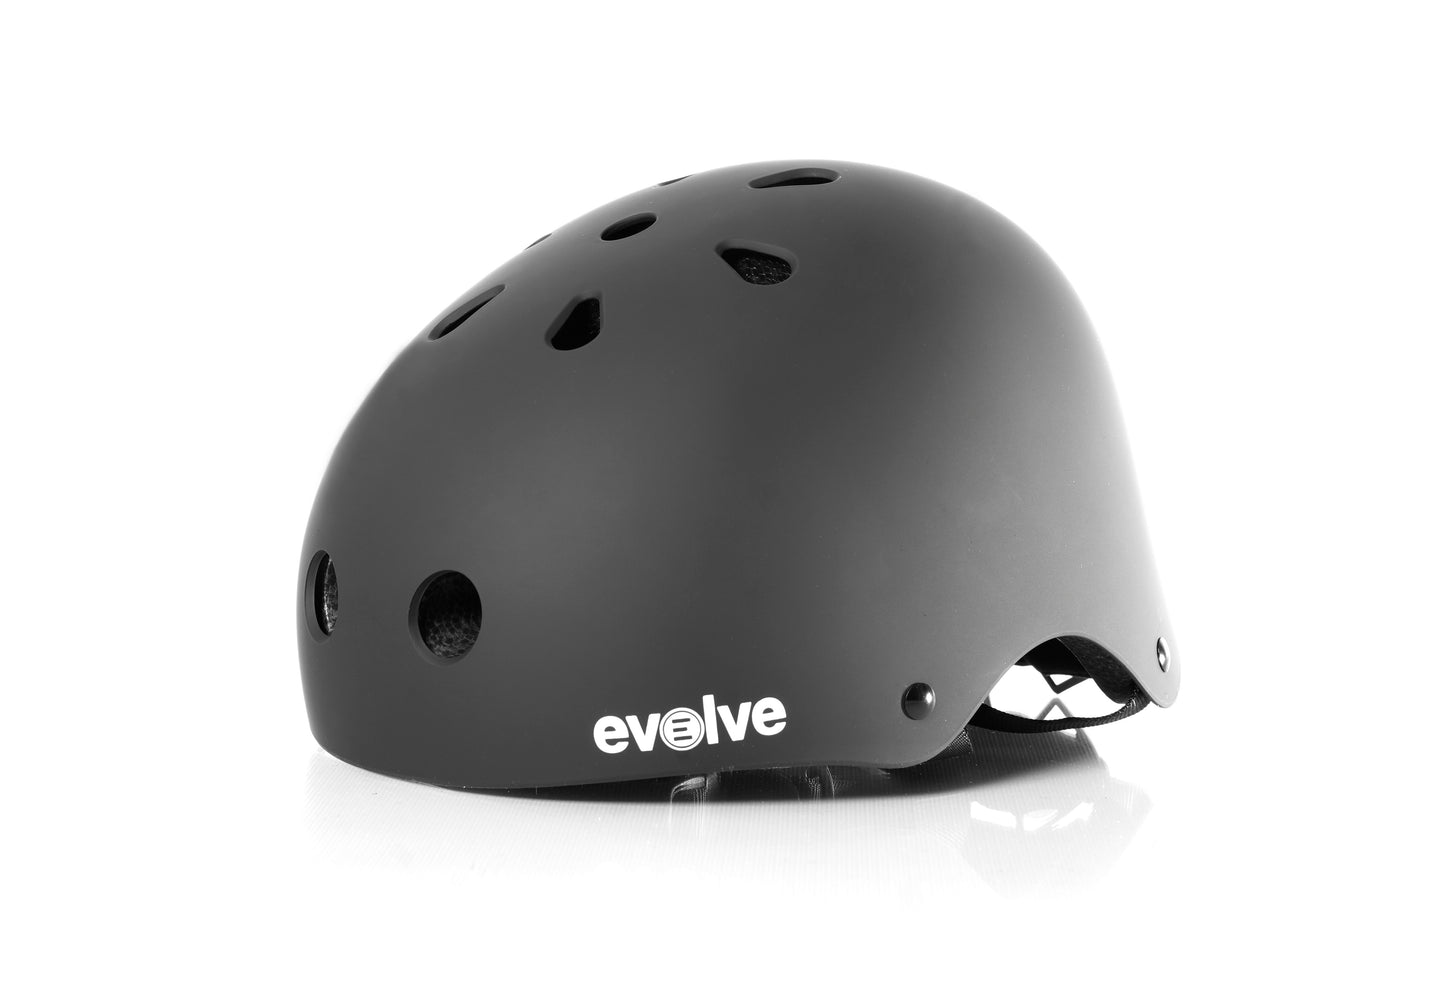 casco skate Evolve - skate electrico - monopatin electrico